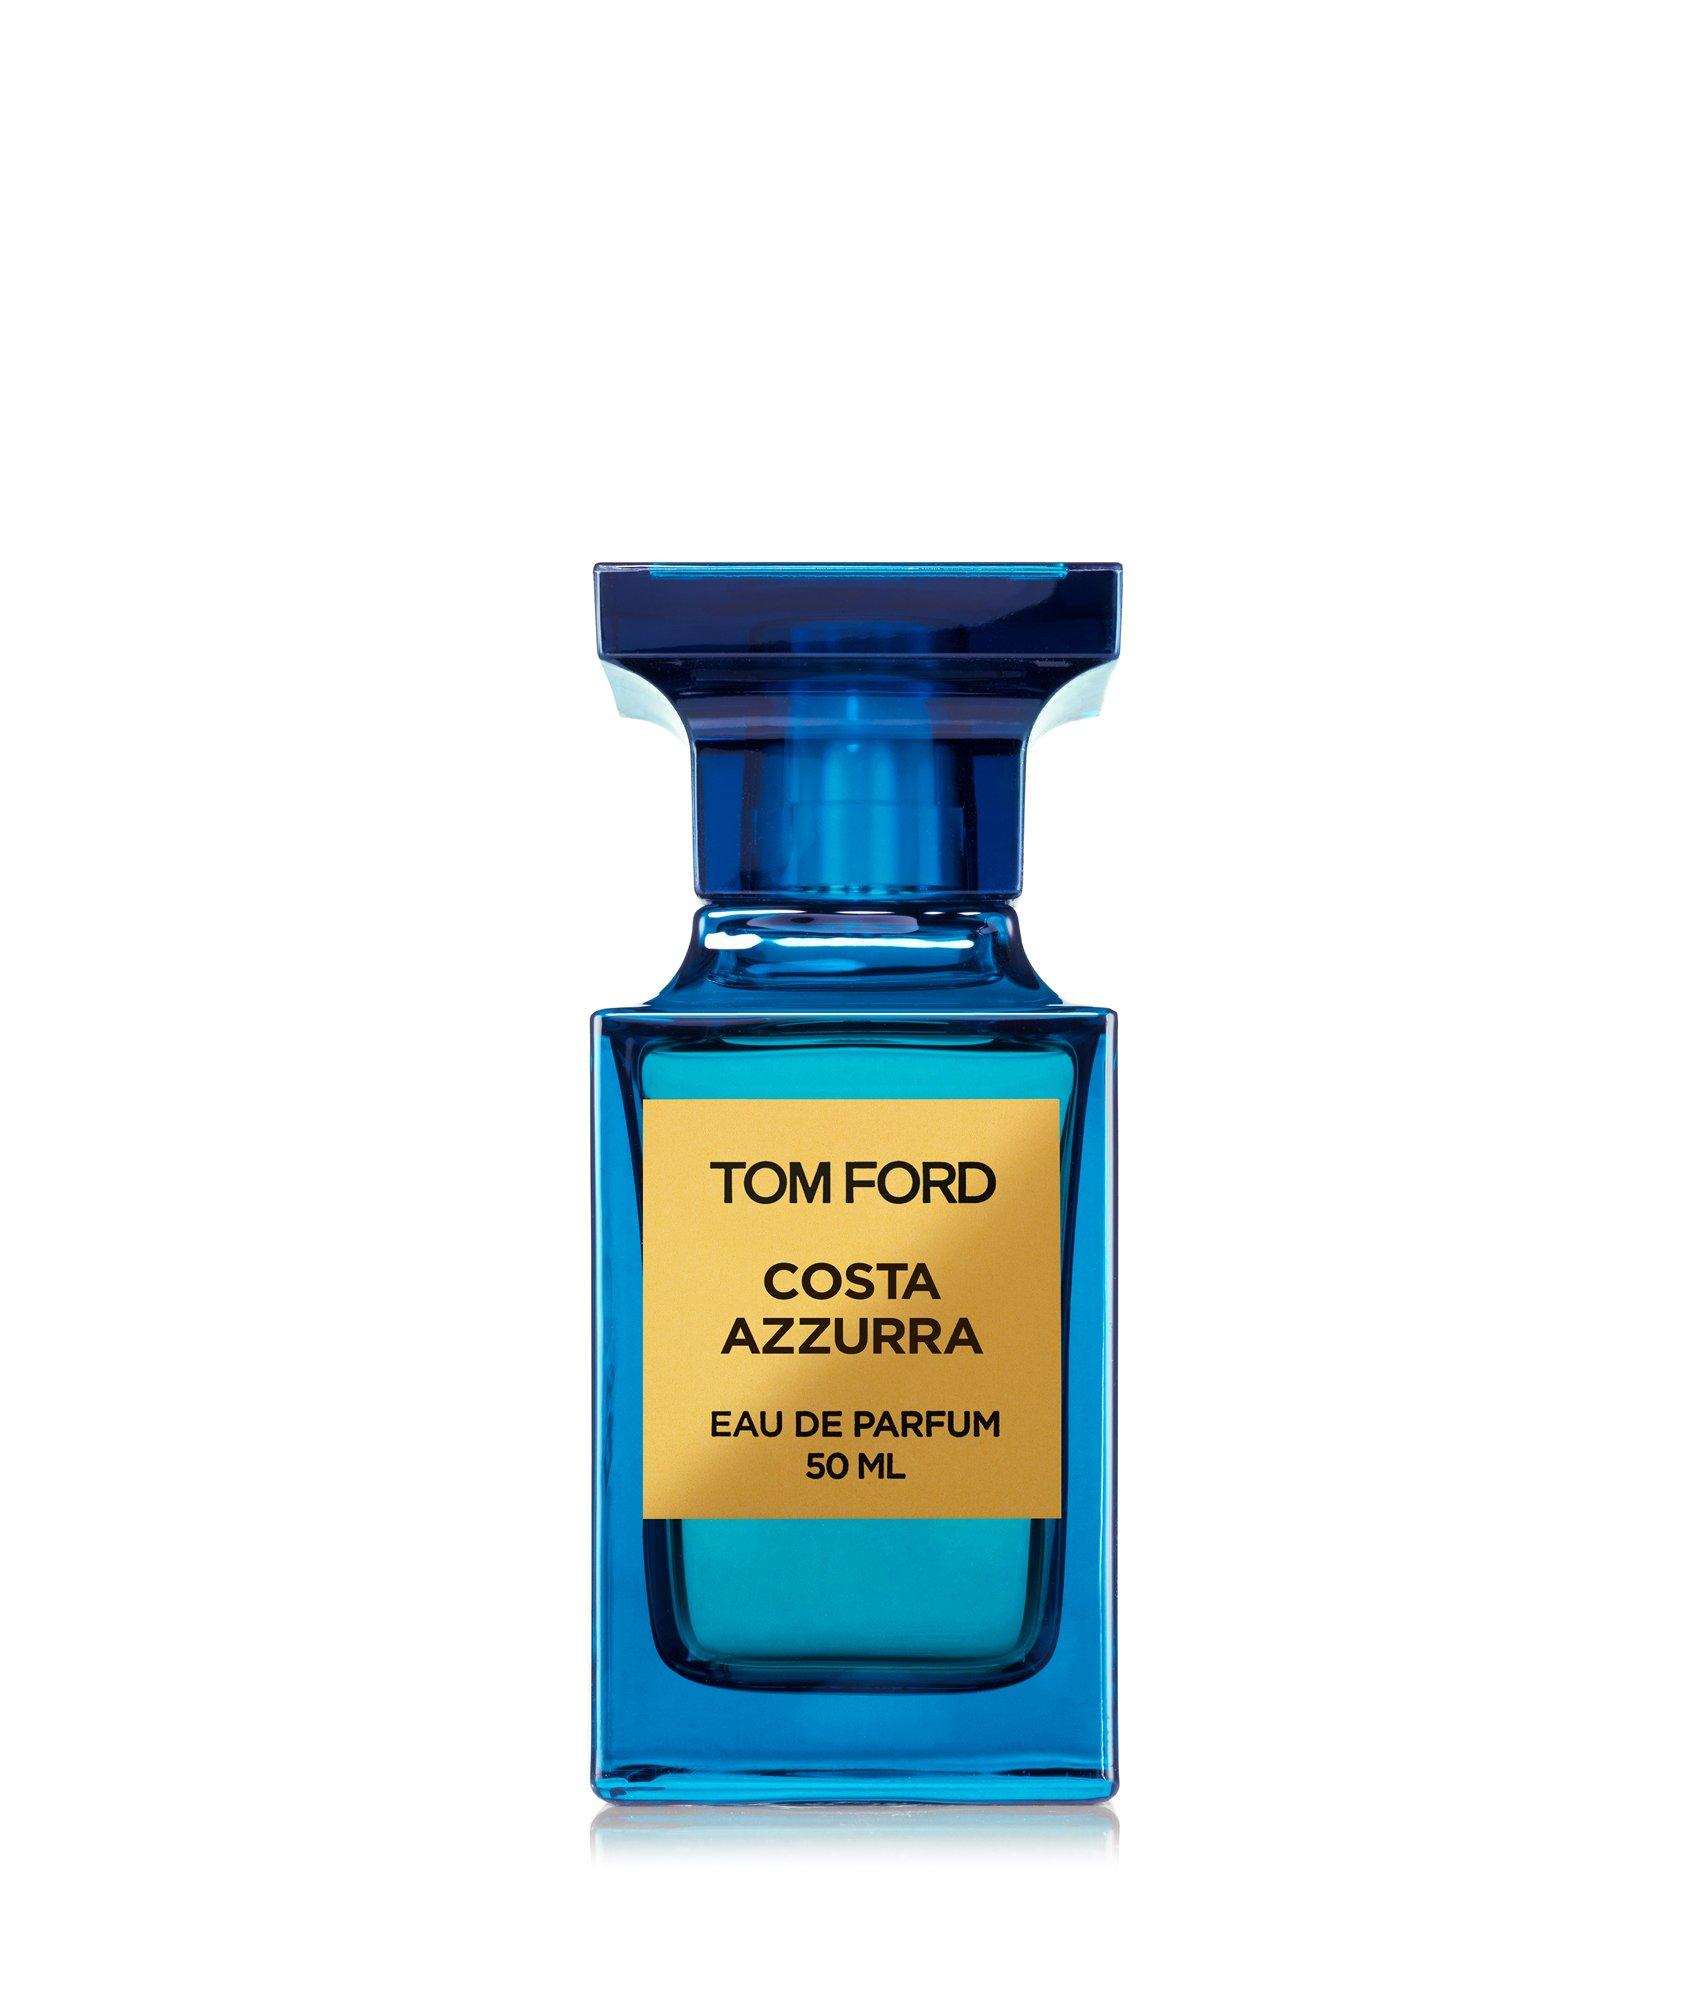 Costa Azzurra Eau de Parfum image 0